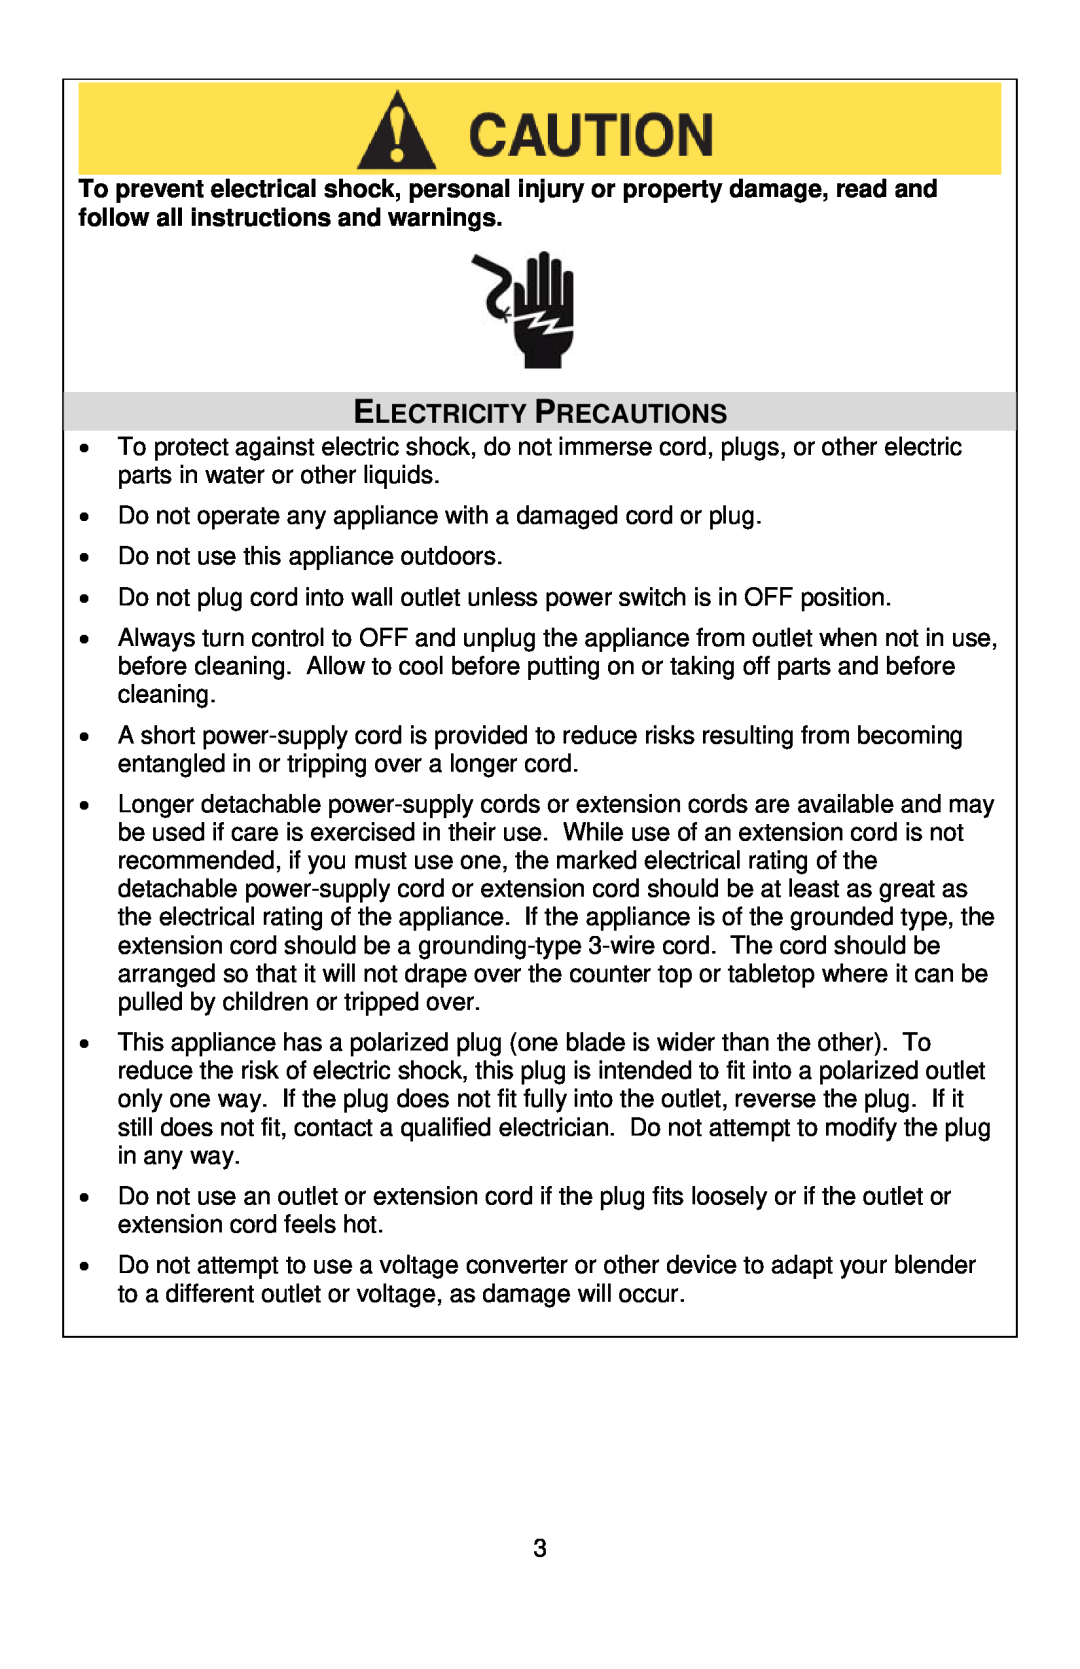 West Bend L5696, 6575 instruction manual Electricity Precautions 